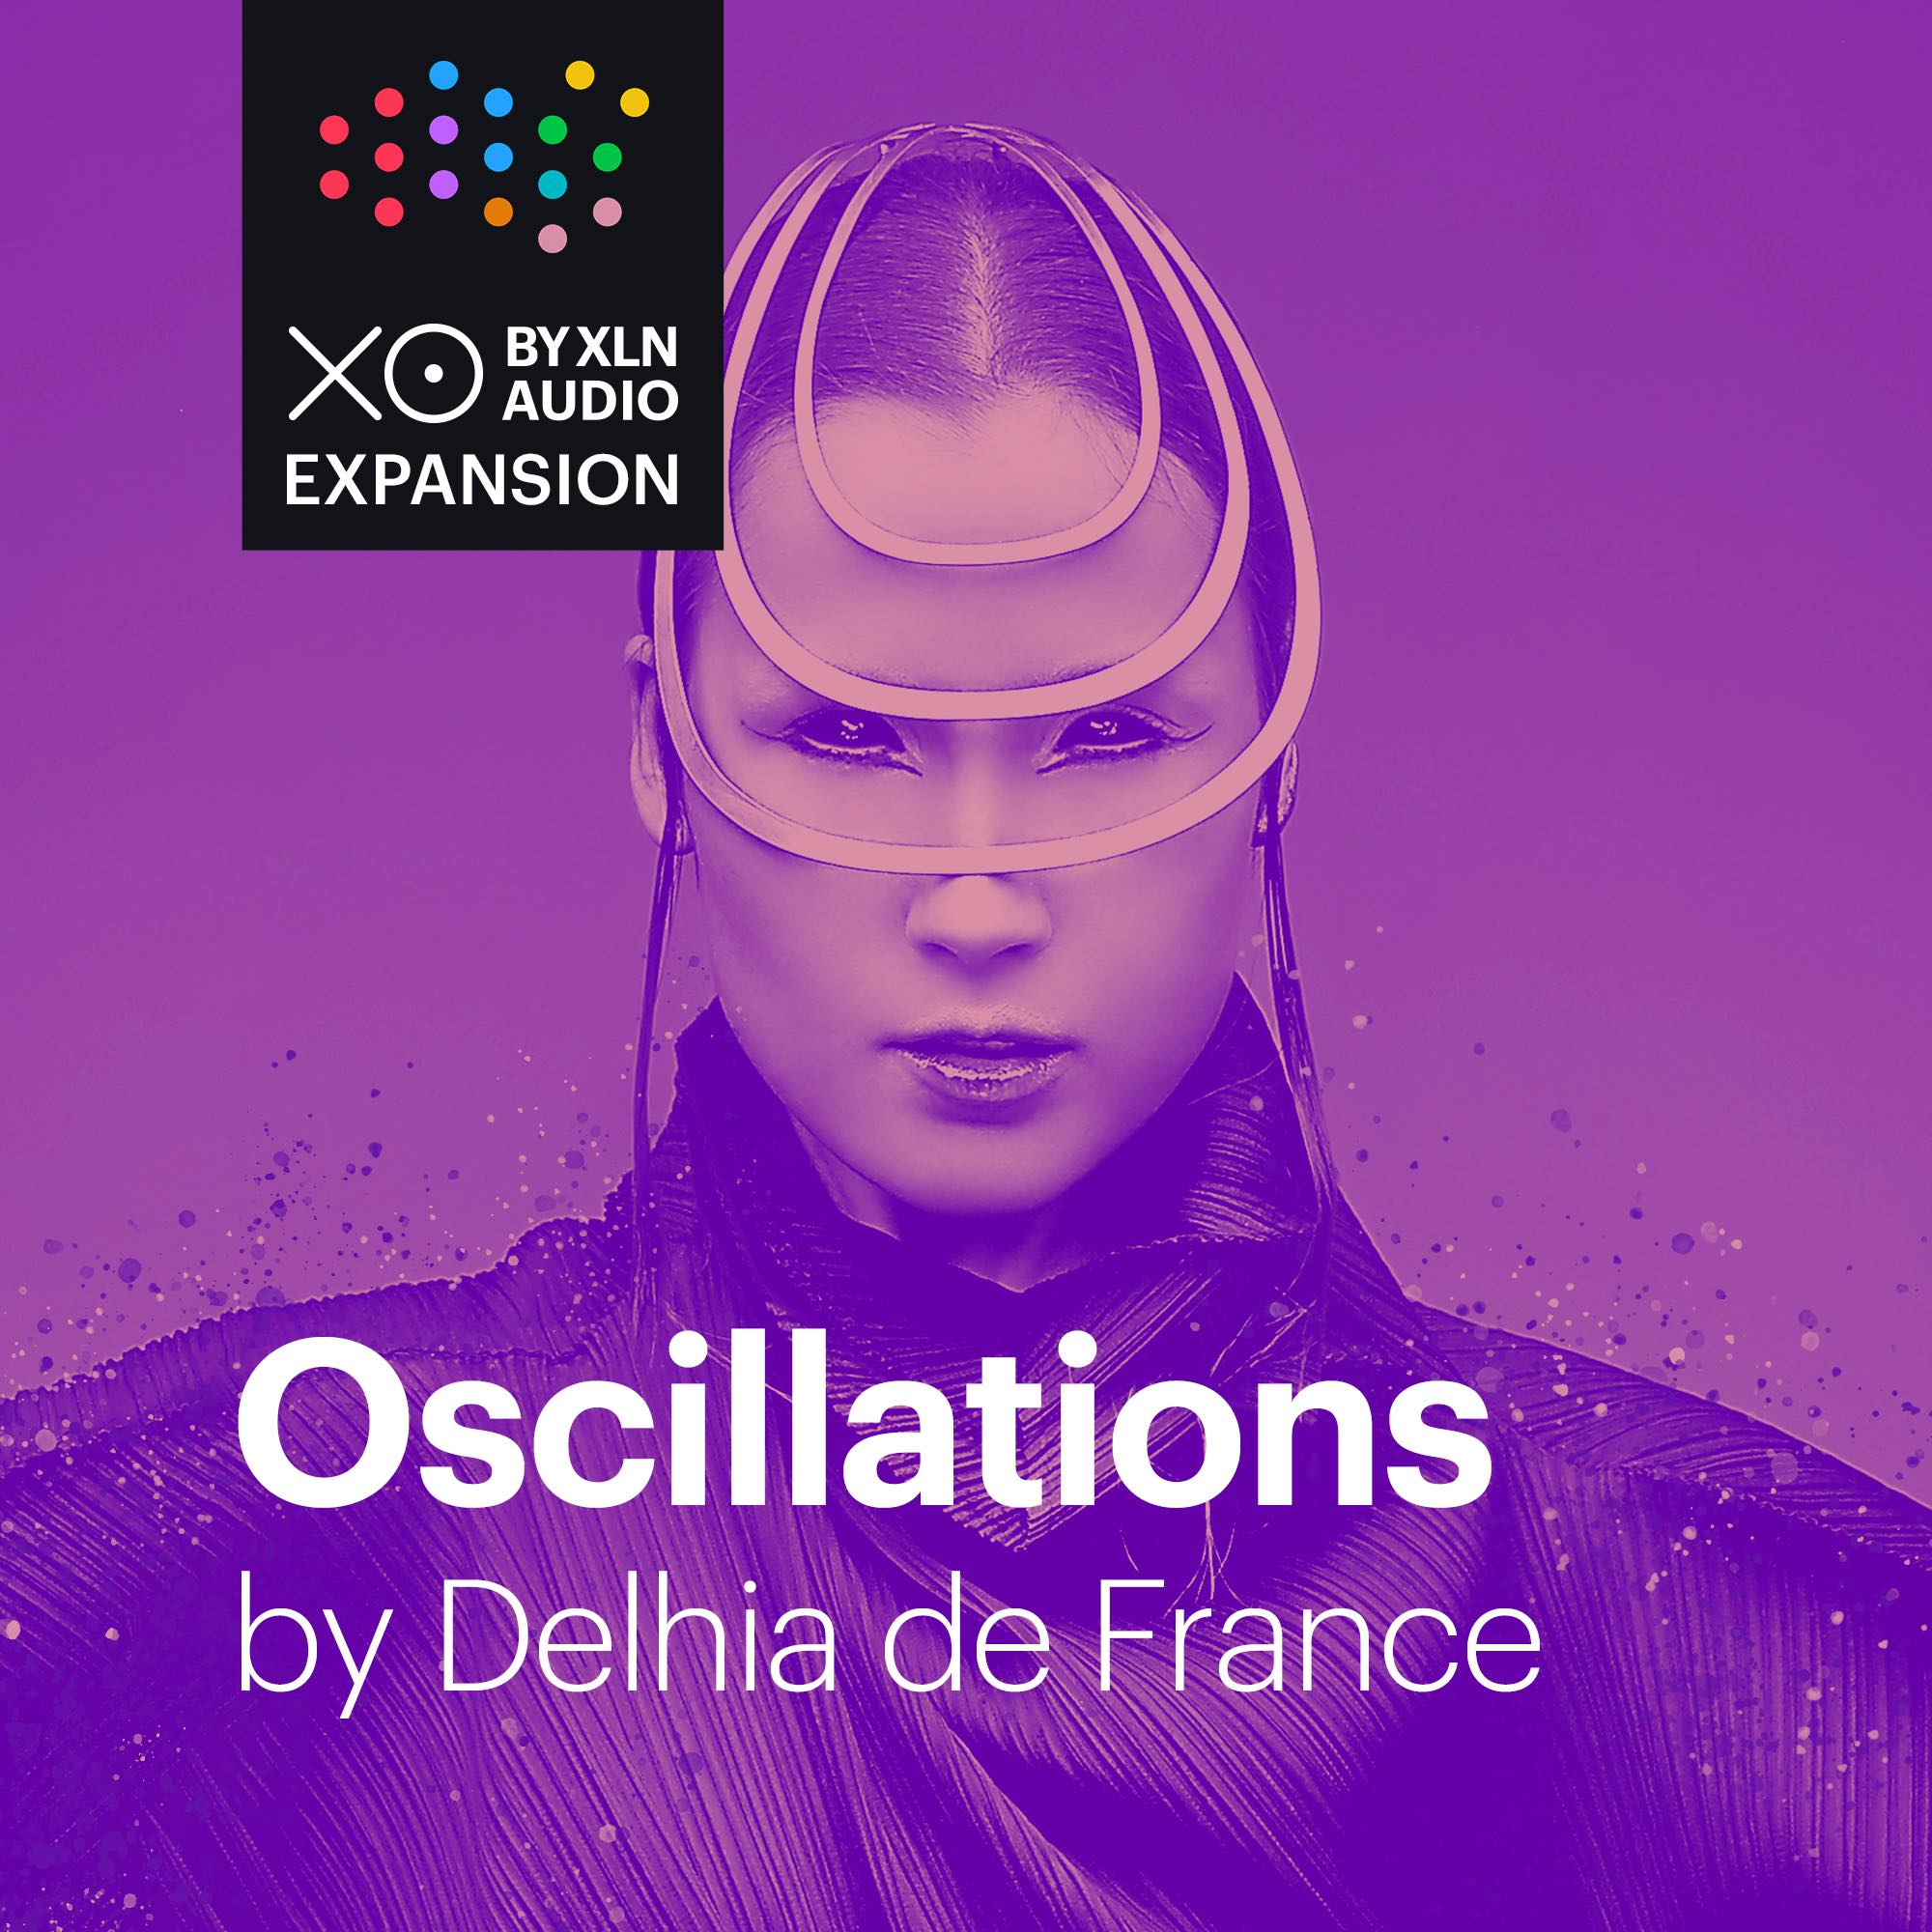 XLN Audio XLN XO Expansion Oscillations by Delhia de France